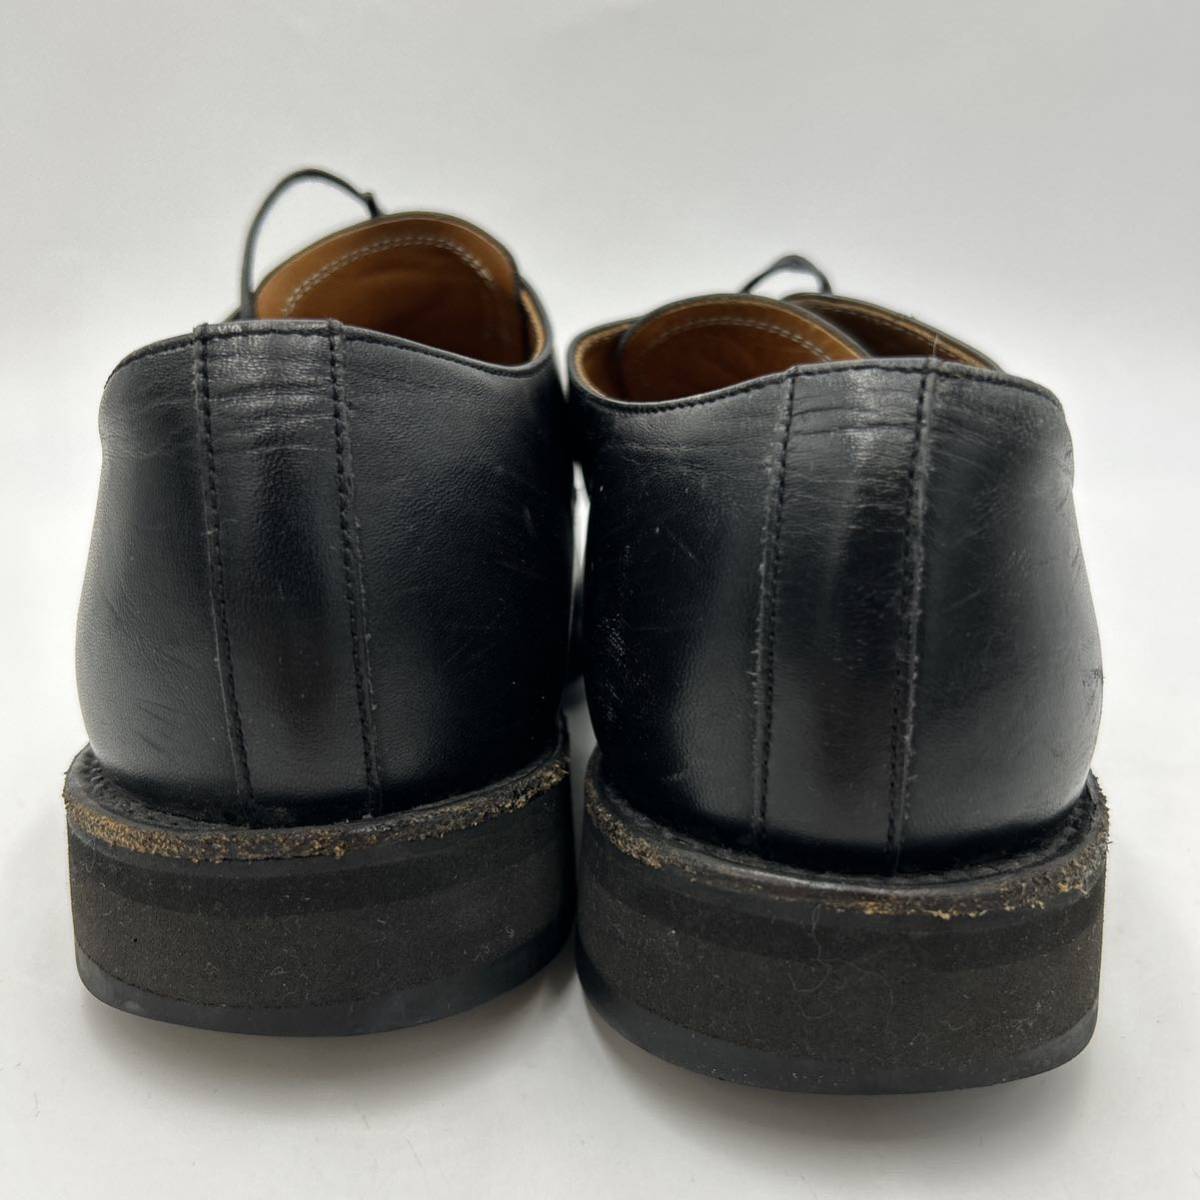 D @ 日本製 '履き心地抜群'『REGAL リーガル』本革 LETHER ビジネスシューズ 革靴 24.5cm 紳士靴 ストレートチップ 内羽根式 BLACK 黒系_画像5